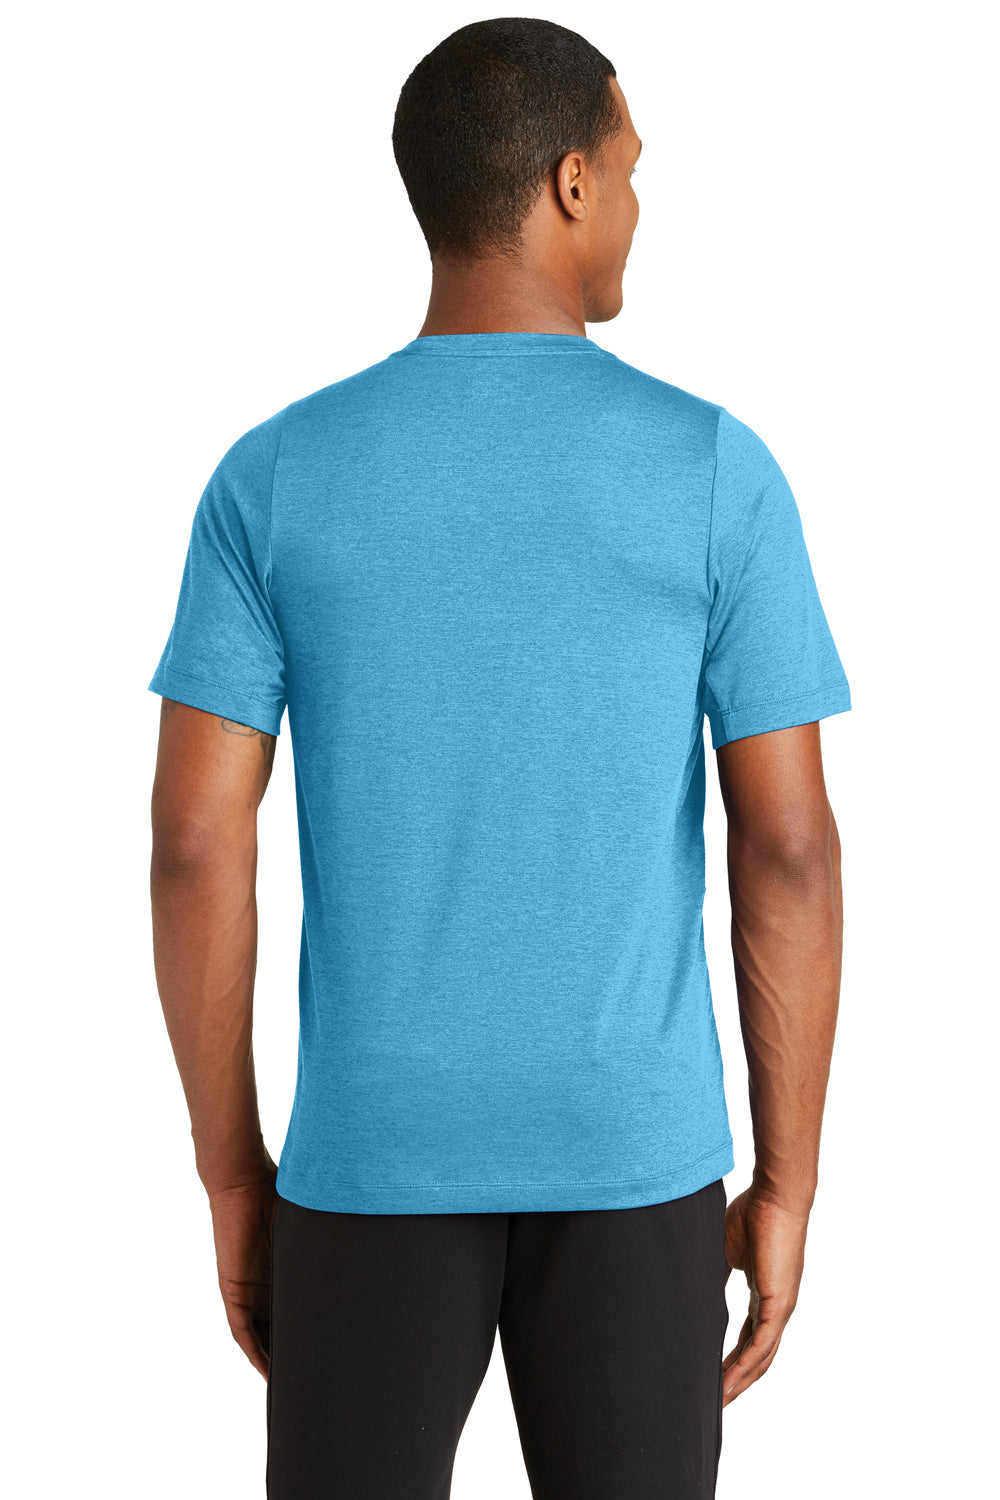 New Era NEA200 Mens Series Performance Jersey Moisture Wicking Short Sleeve Crewneck T-Shirt Sky Blue Back